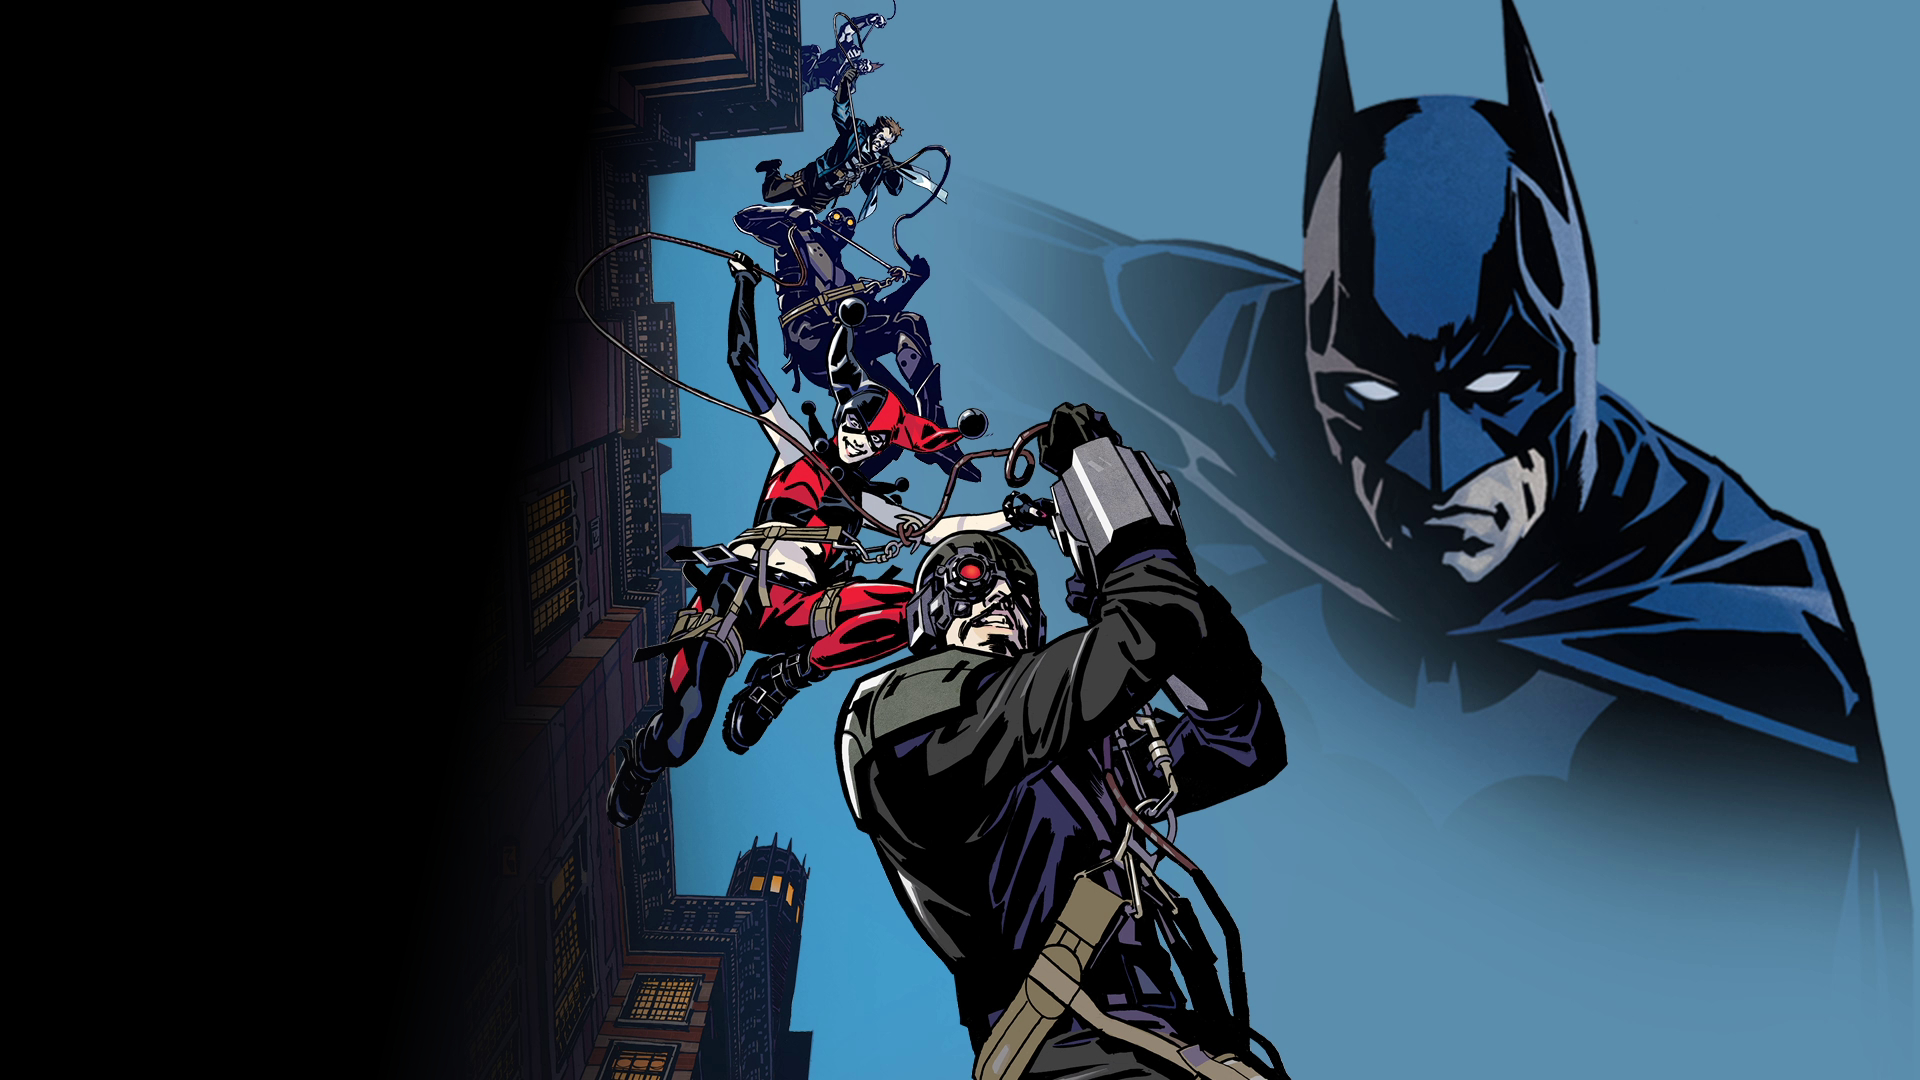 Скачать обои бесплатно Кино, Бэтмен, Бэтмен: Нападение На Аркхэм картинка на рабочий стол ПК